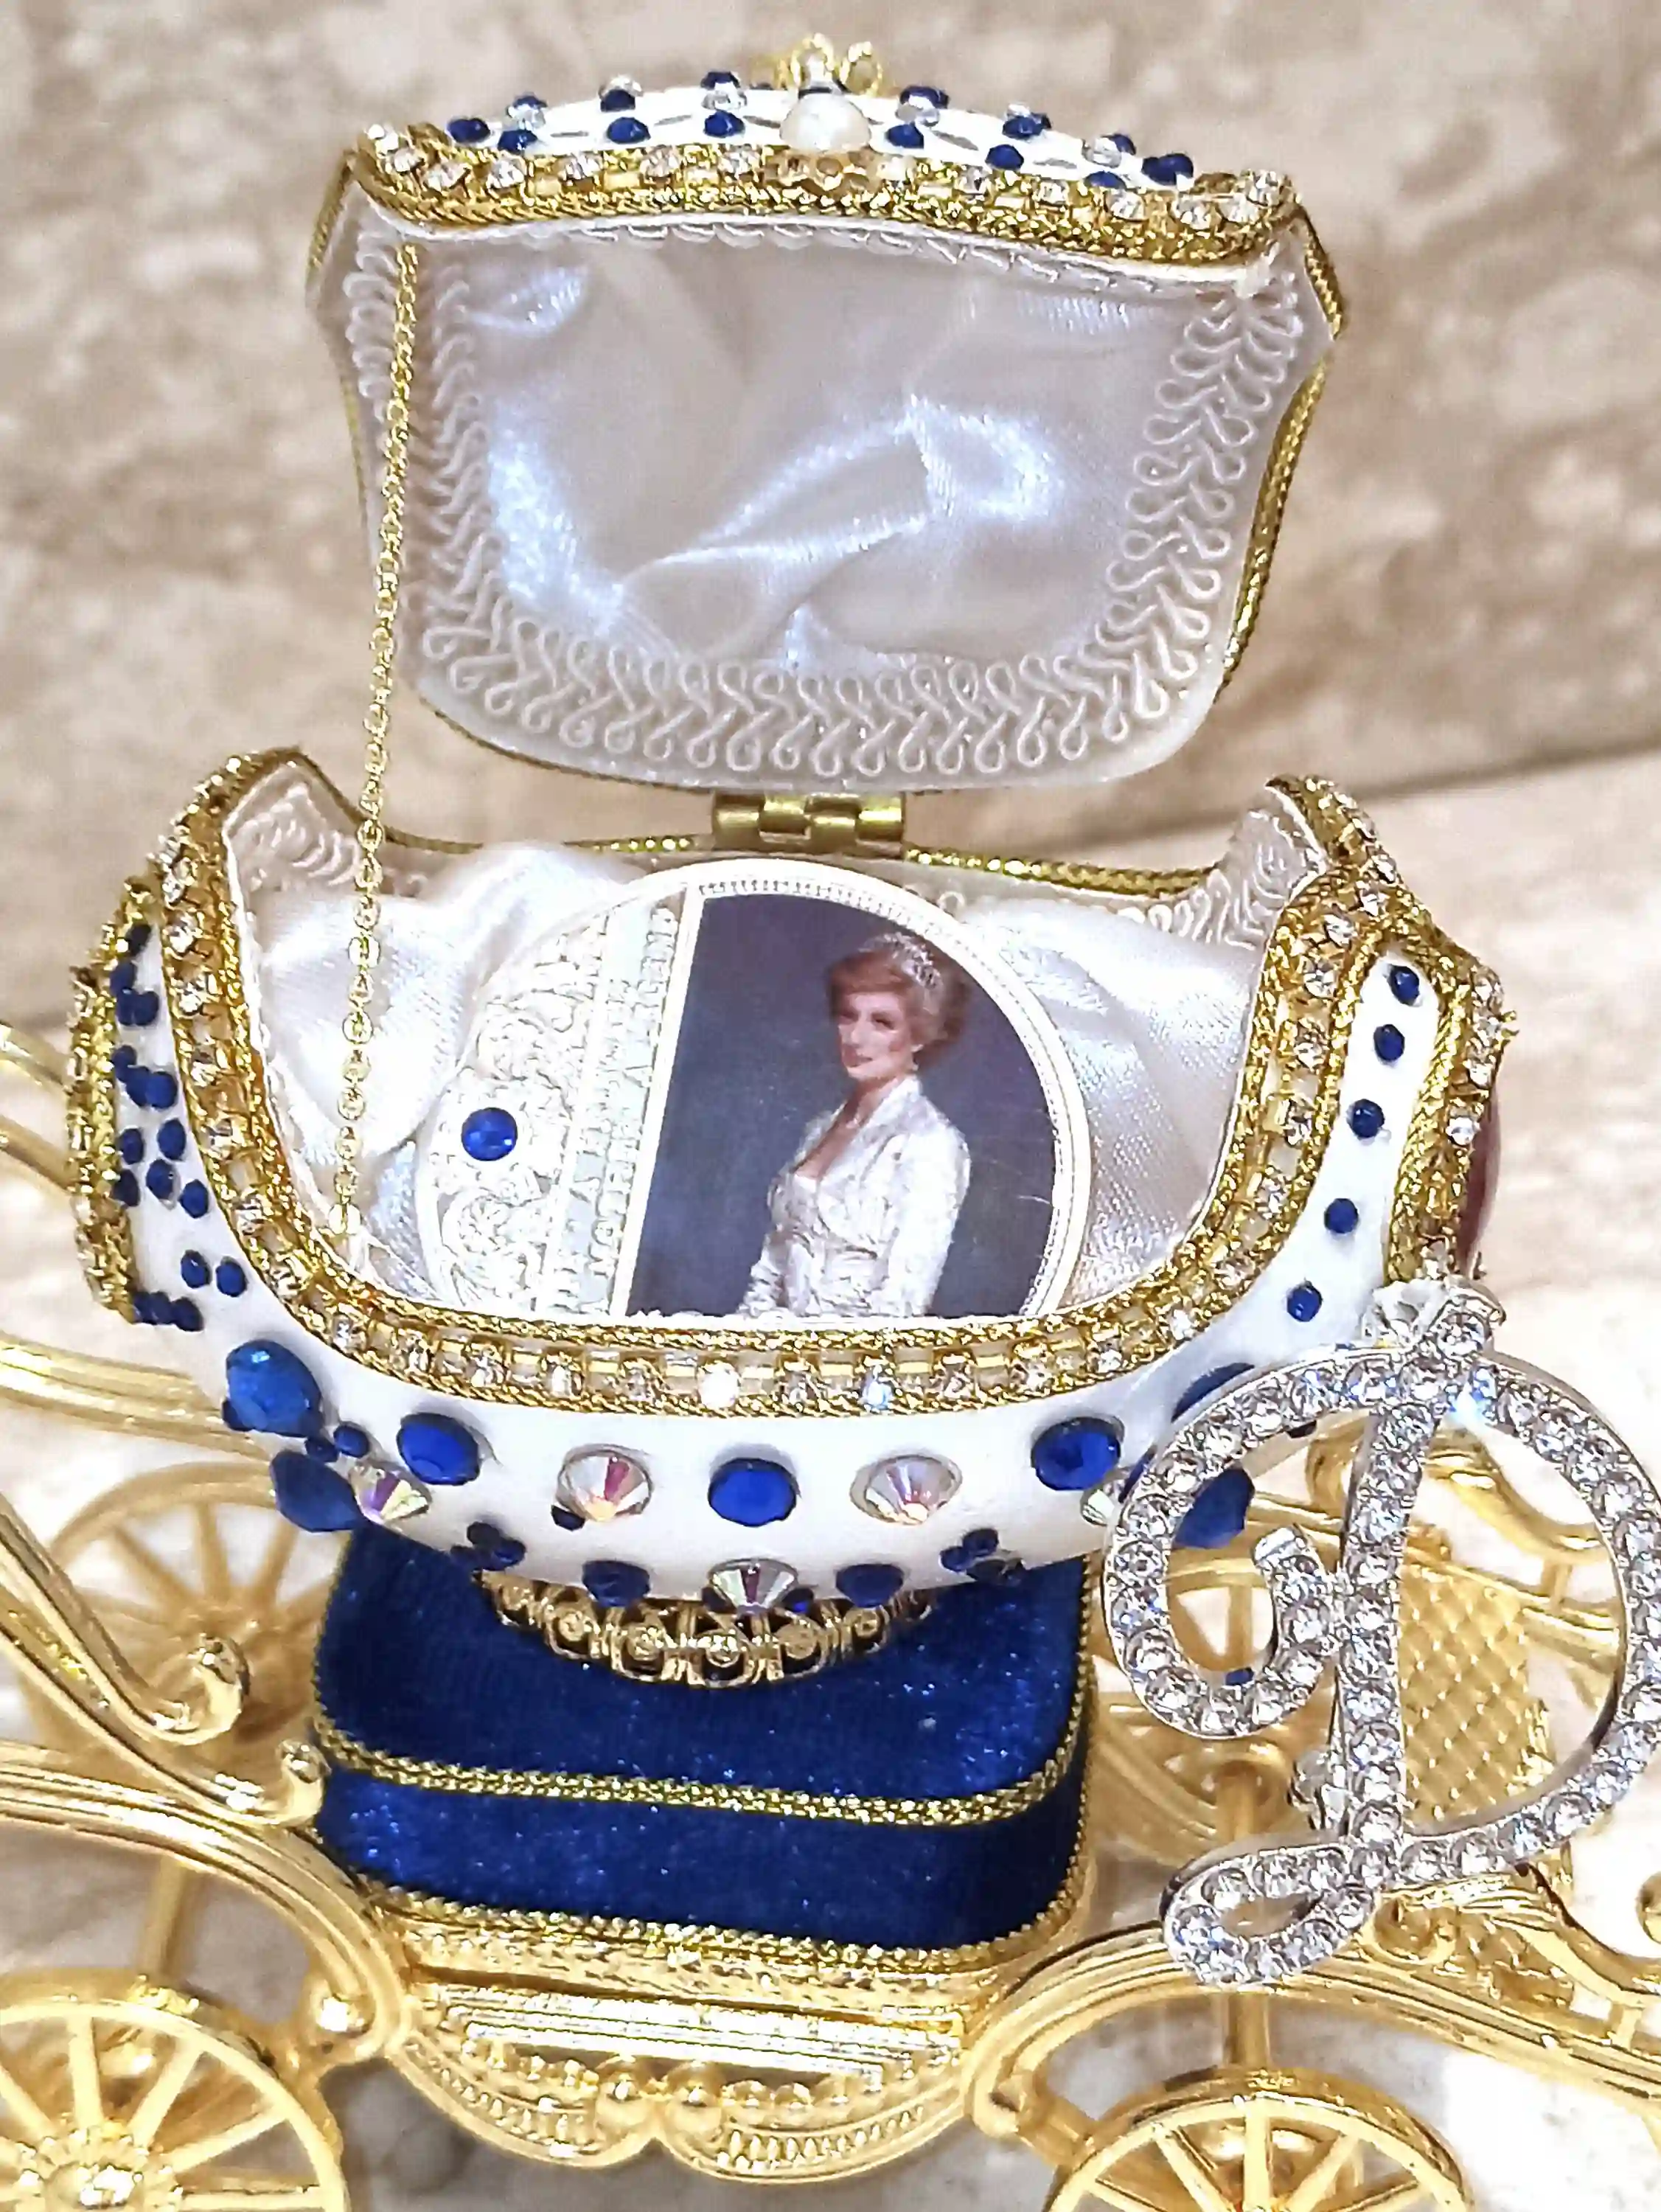 Luxury Antique Princess Diana Memorabilia Gift, Faberge Egg Music Box,Royal Diana Silver Coin Jewelry box,Faberge egg Trinket box 24kt 